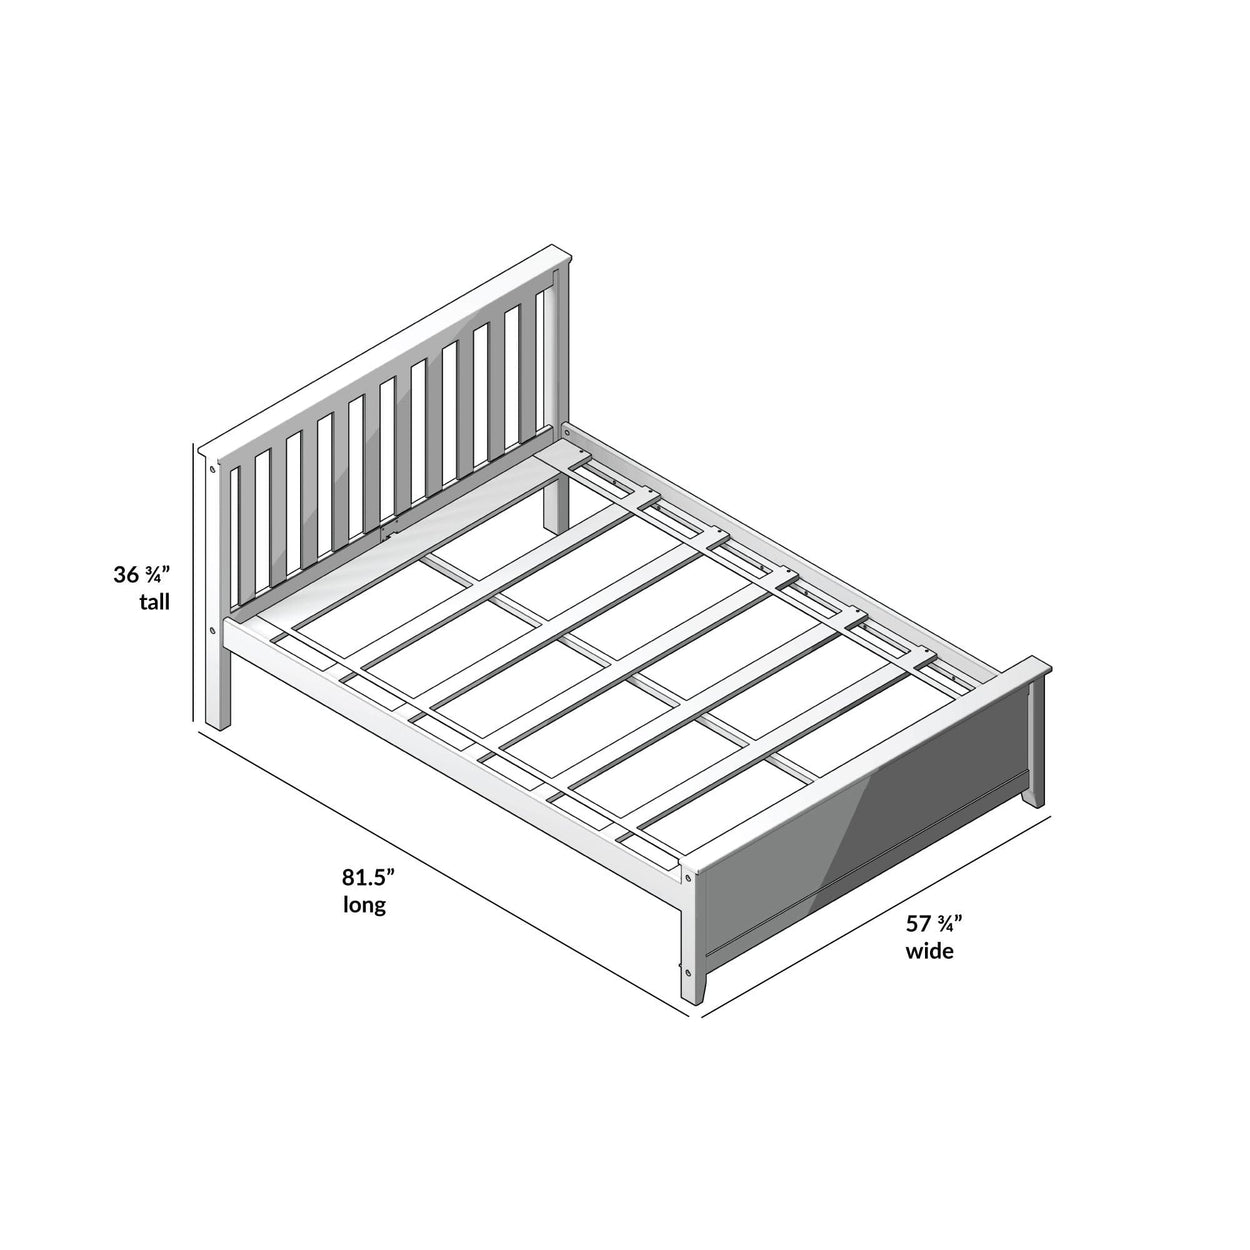 180211-131 : Kids Beds Classic Full-Size Platform Bed, Blue